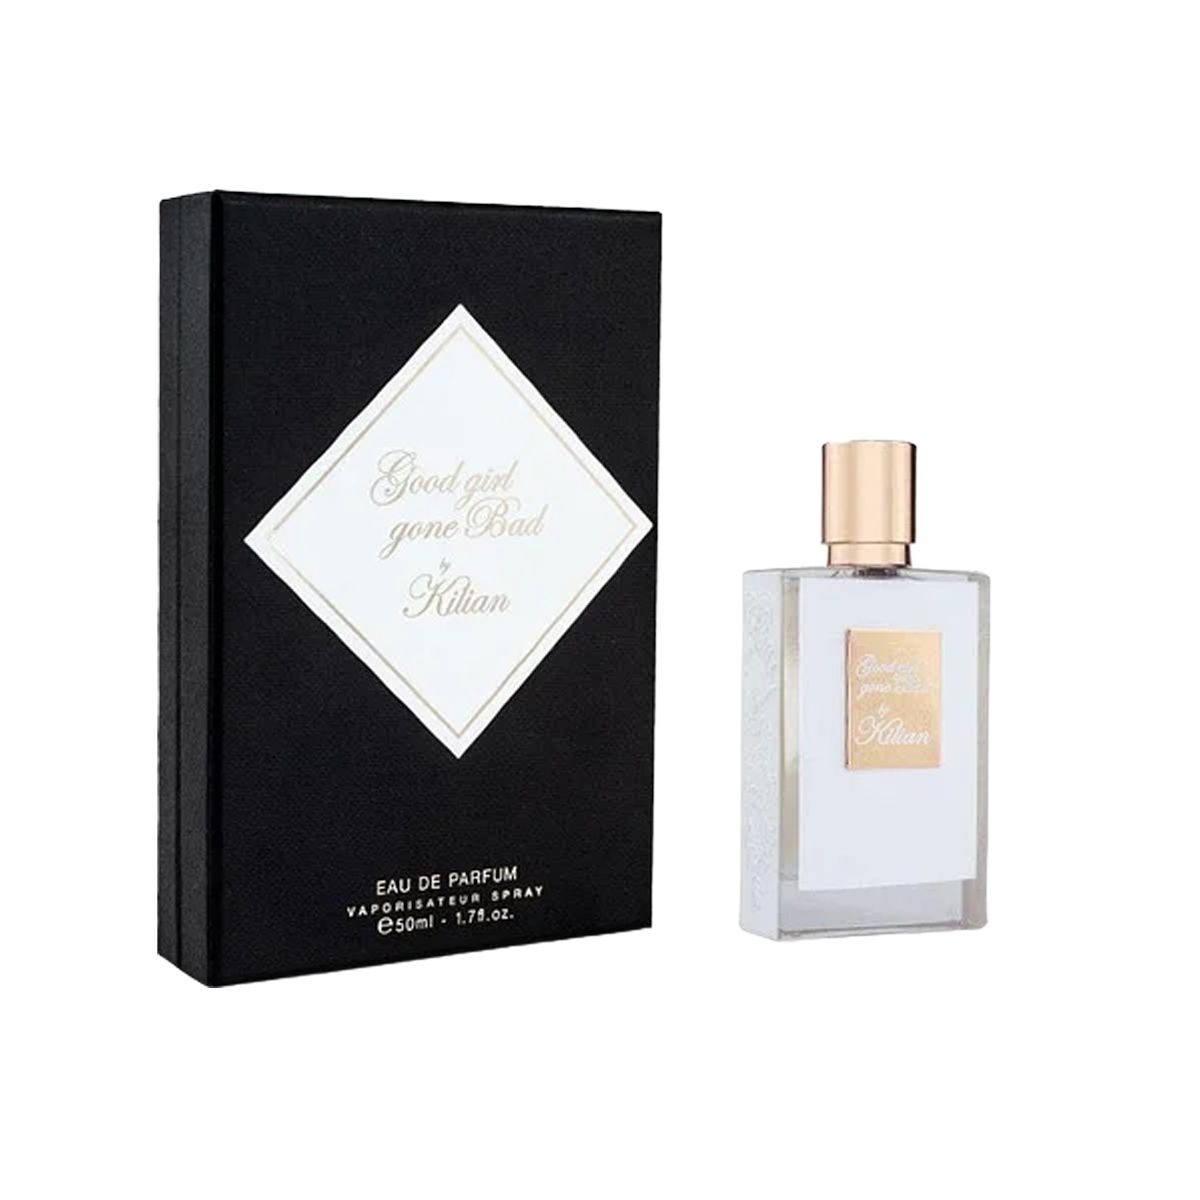 Chanel Miniature Perfume Gift Set 7.5ml x 8pcs – The Fragrance